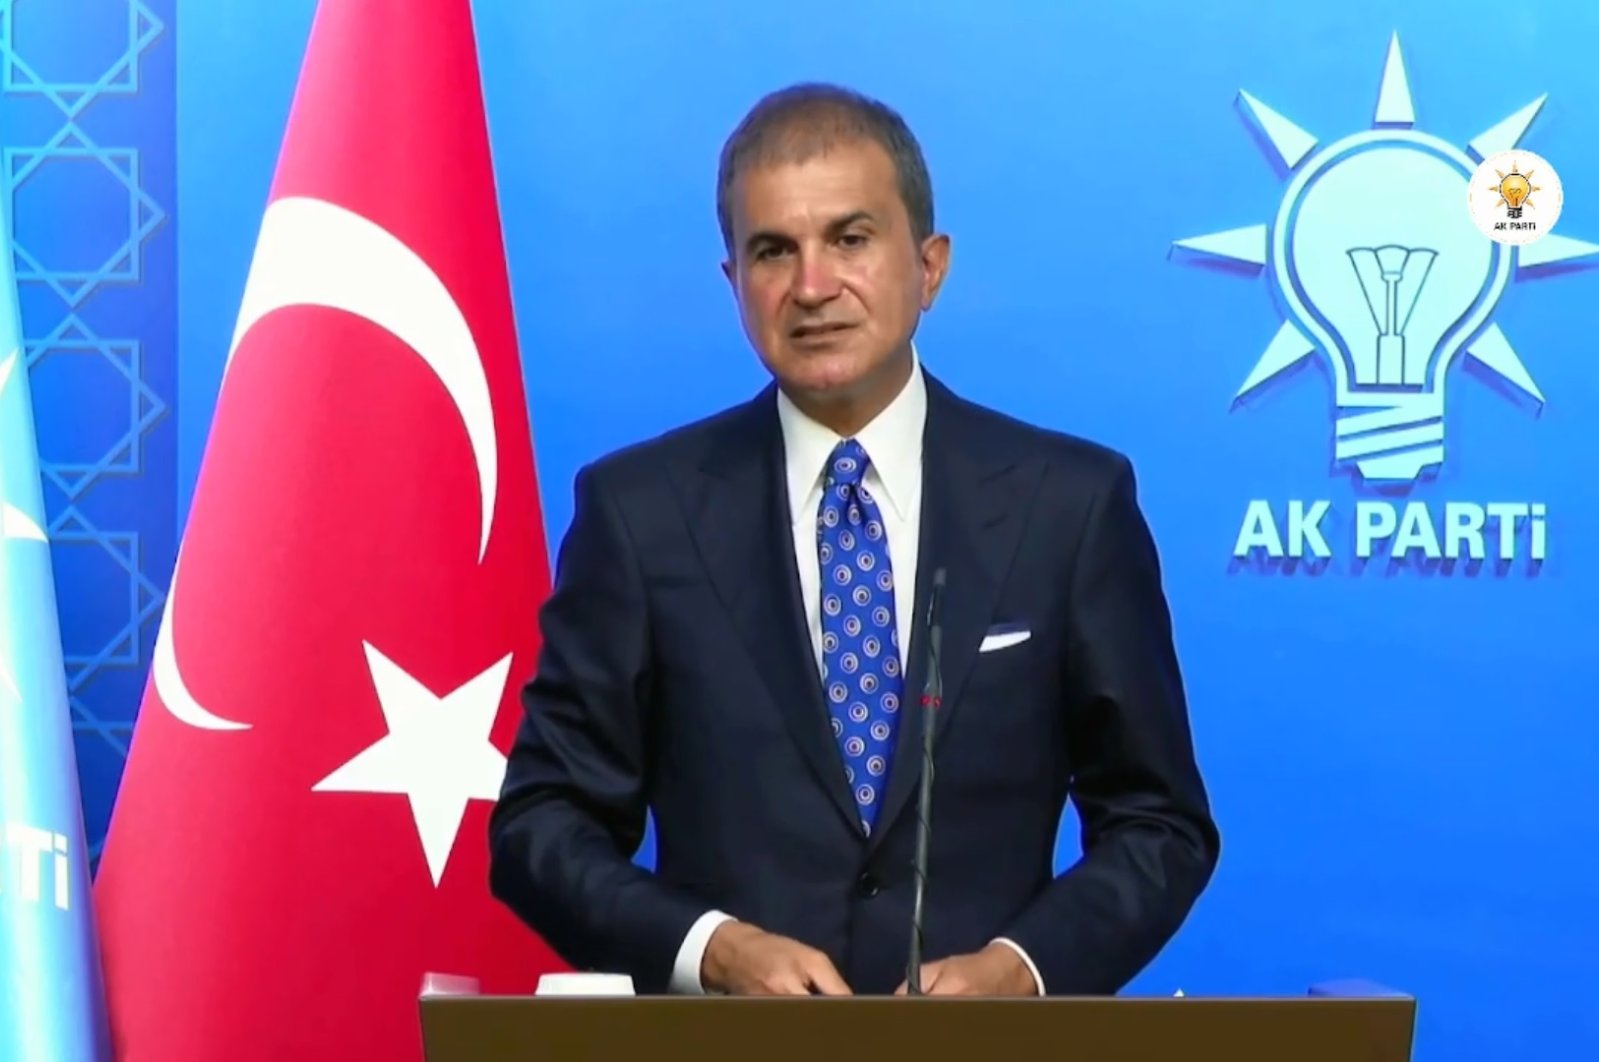 AK Party spokesperson Ömer Çelik speaks at a news conference in Ankara, Turkey, Aug. 23, 2021. (DHA Photo)